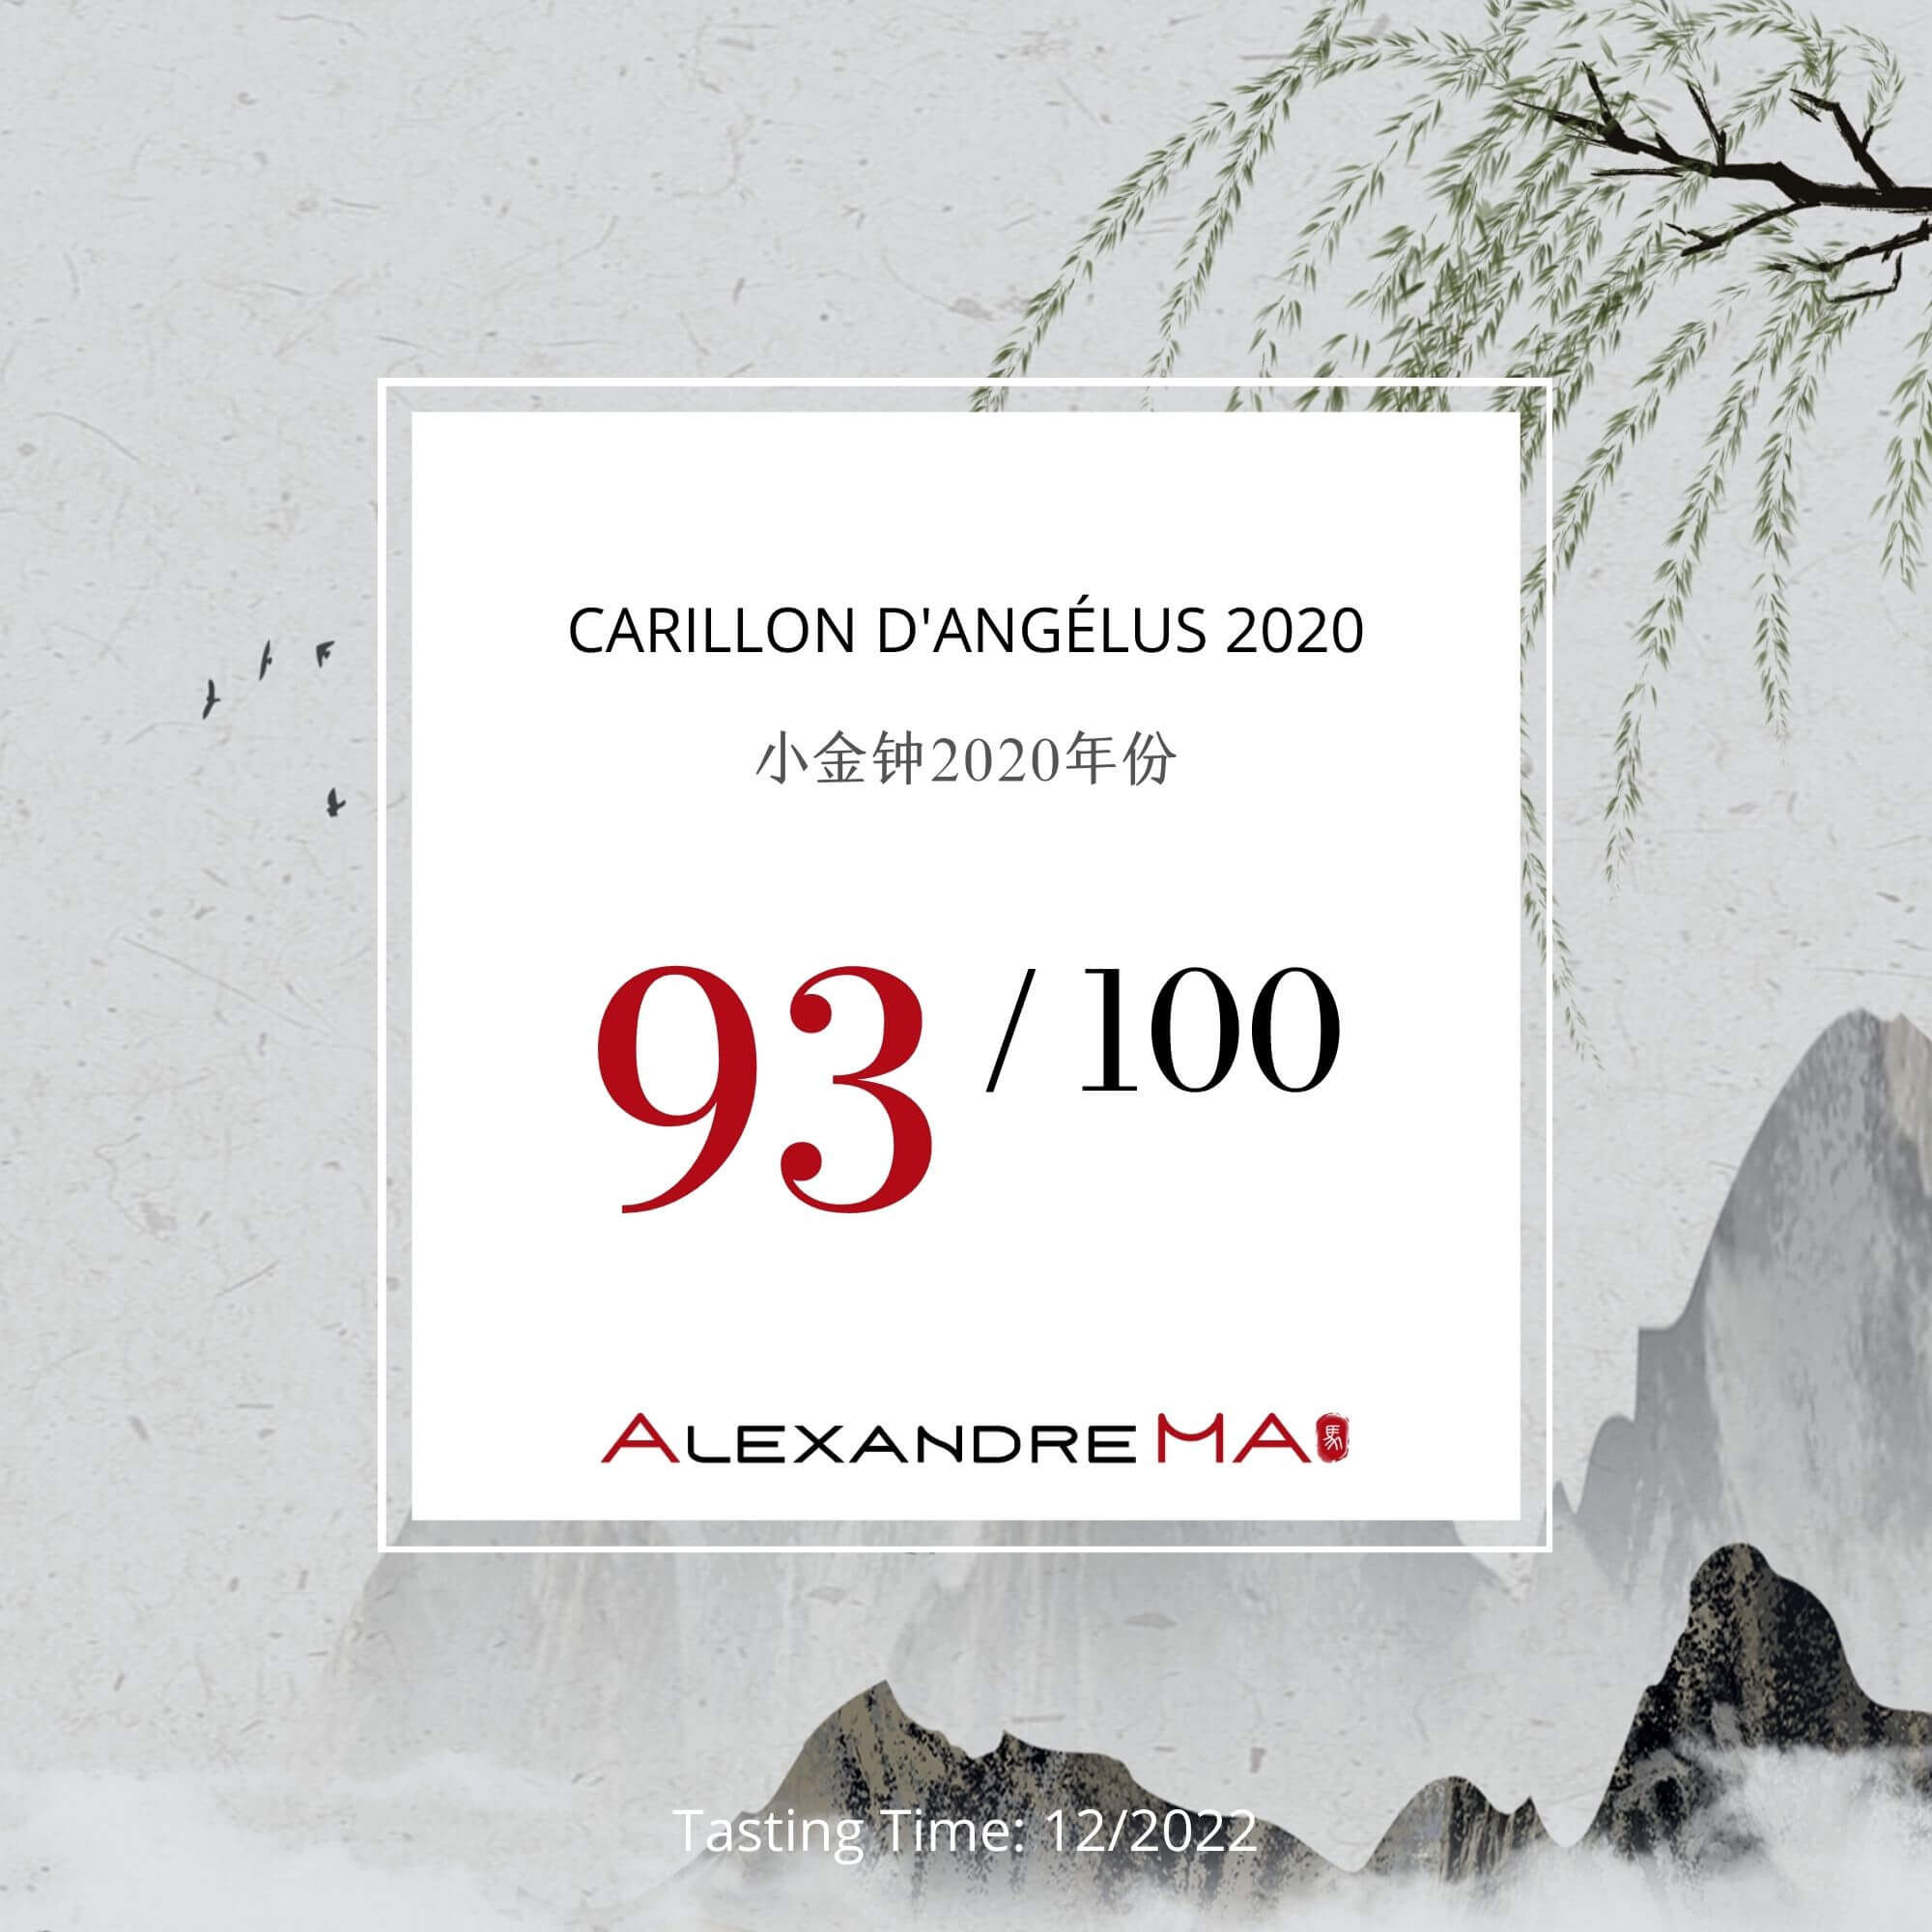 Carillon d’Angélus 2020 - Alexandre MA